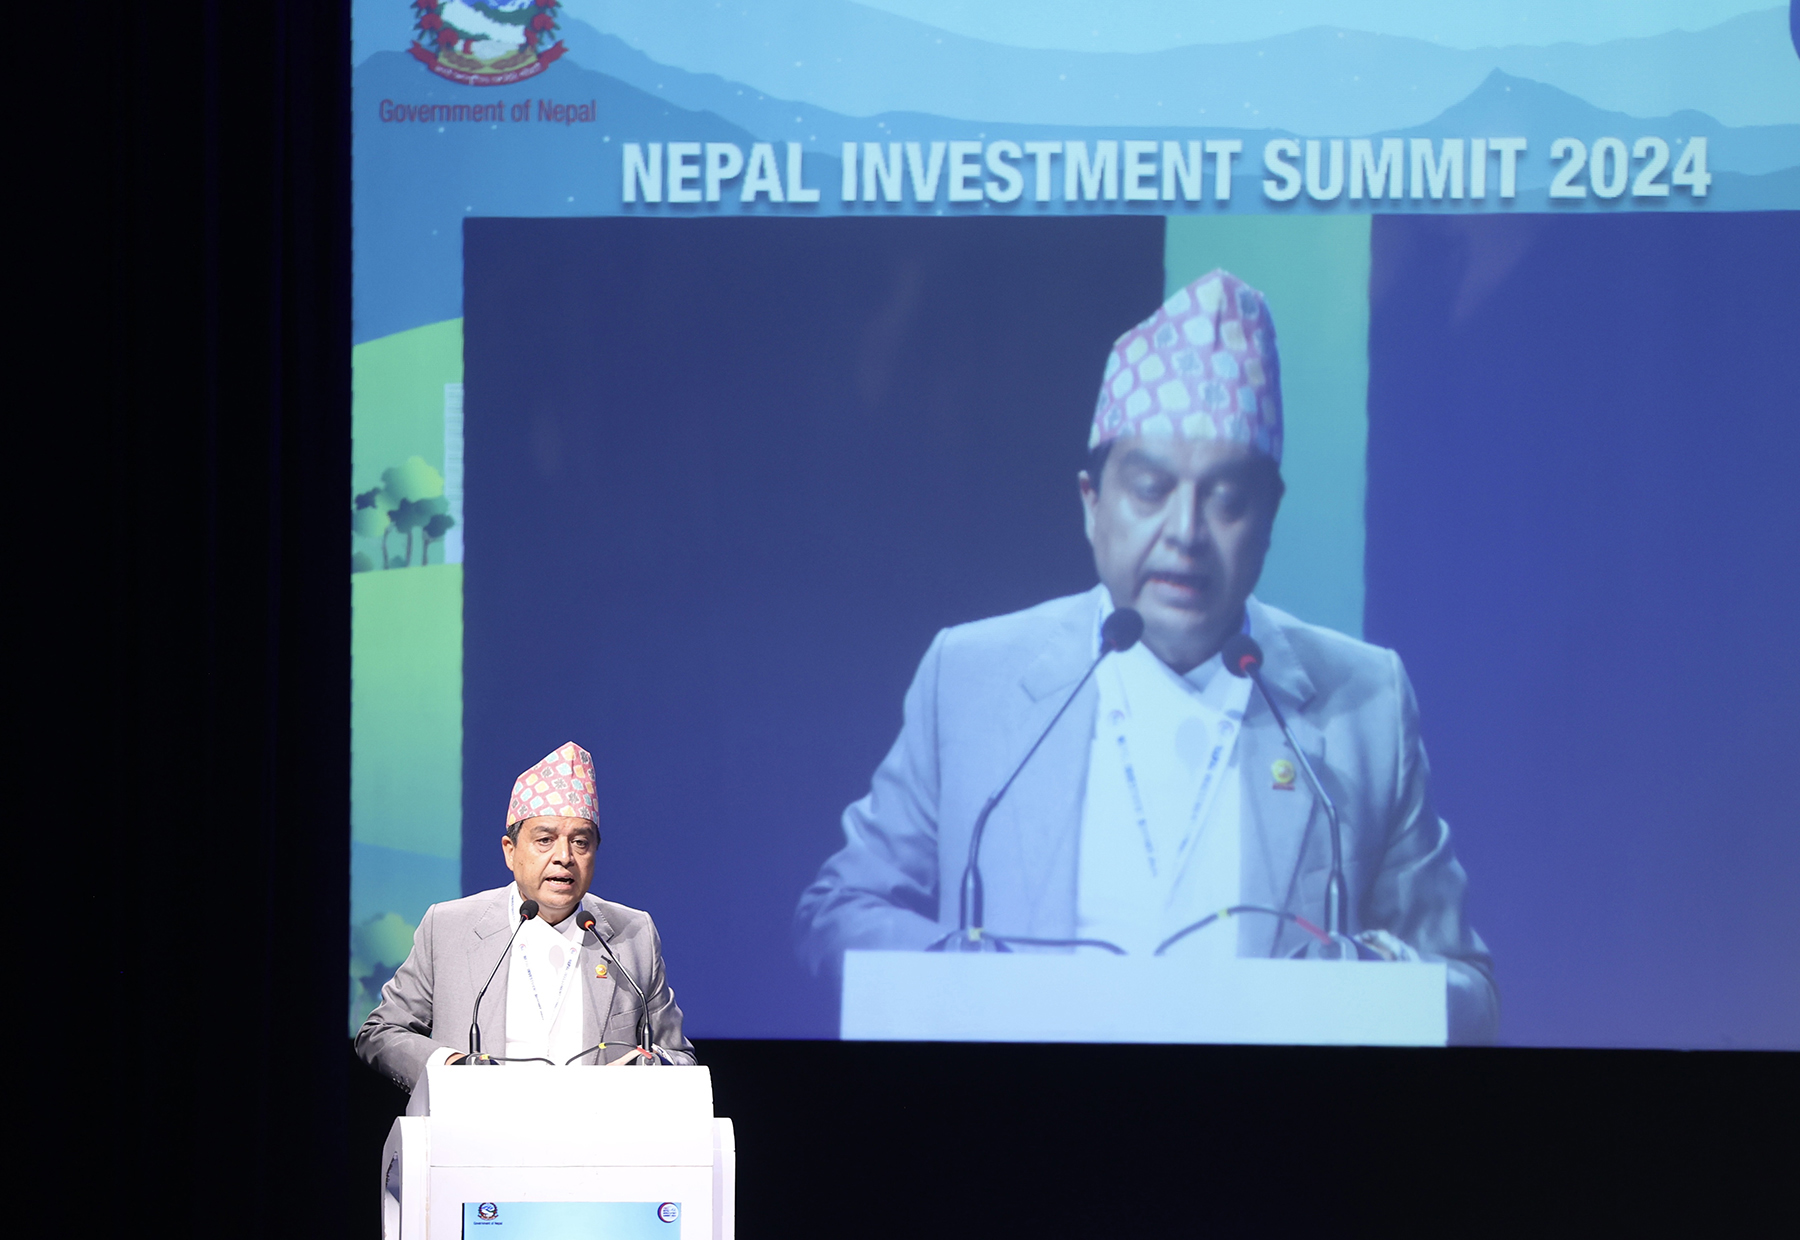 FNCCI President urges investors to explore Nepal’s promising sectors